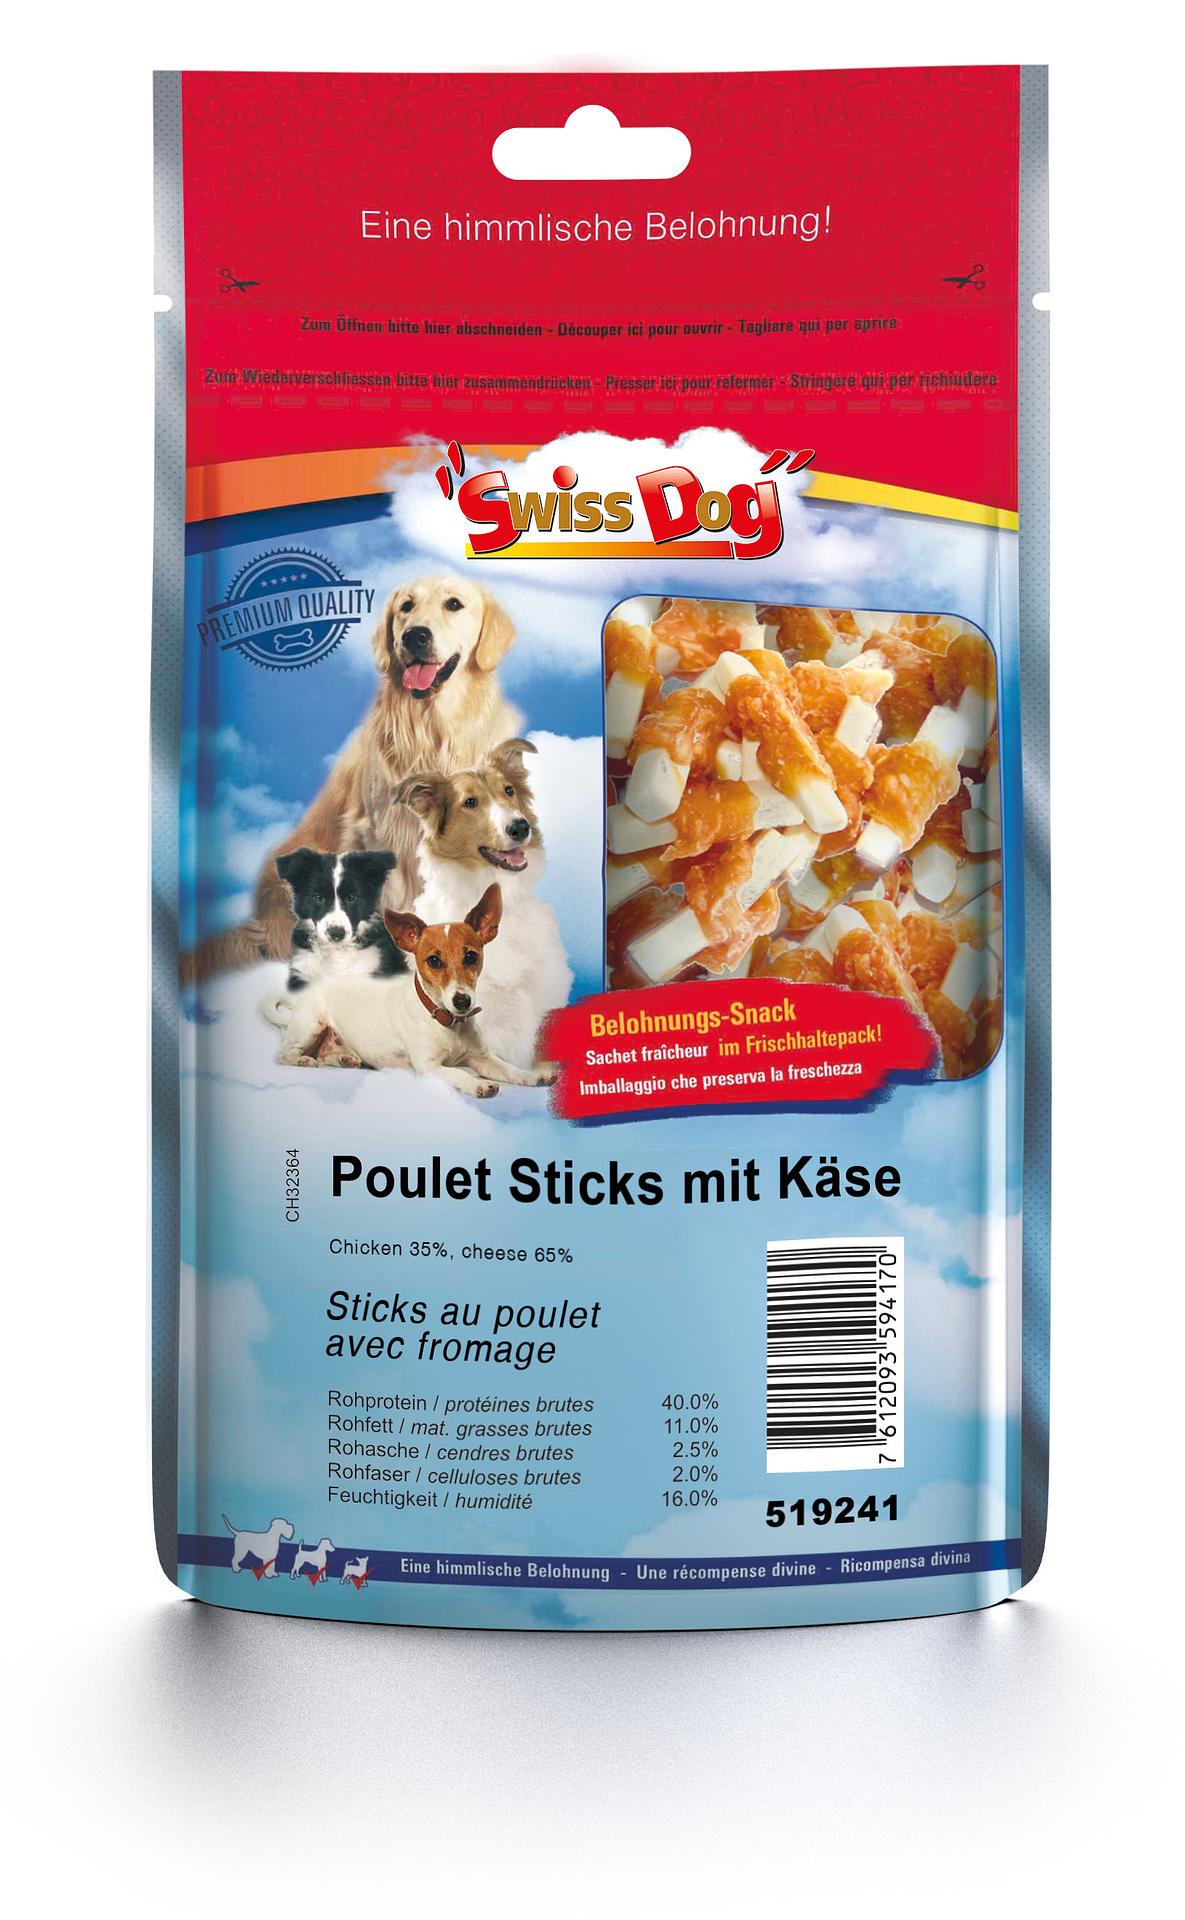 SwissDog Poulet-Sticks mit Käse, 500g